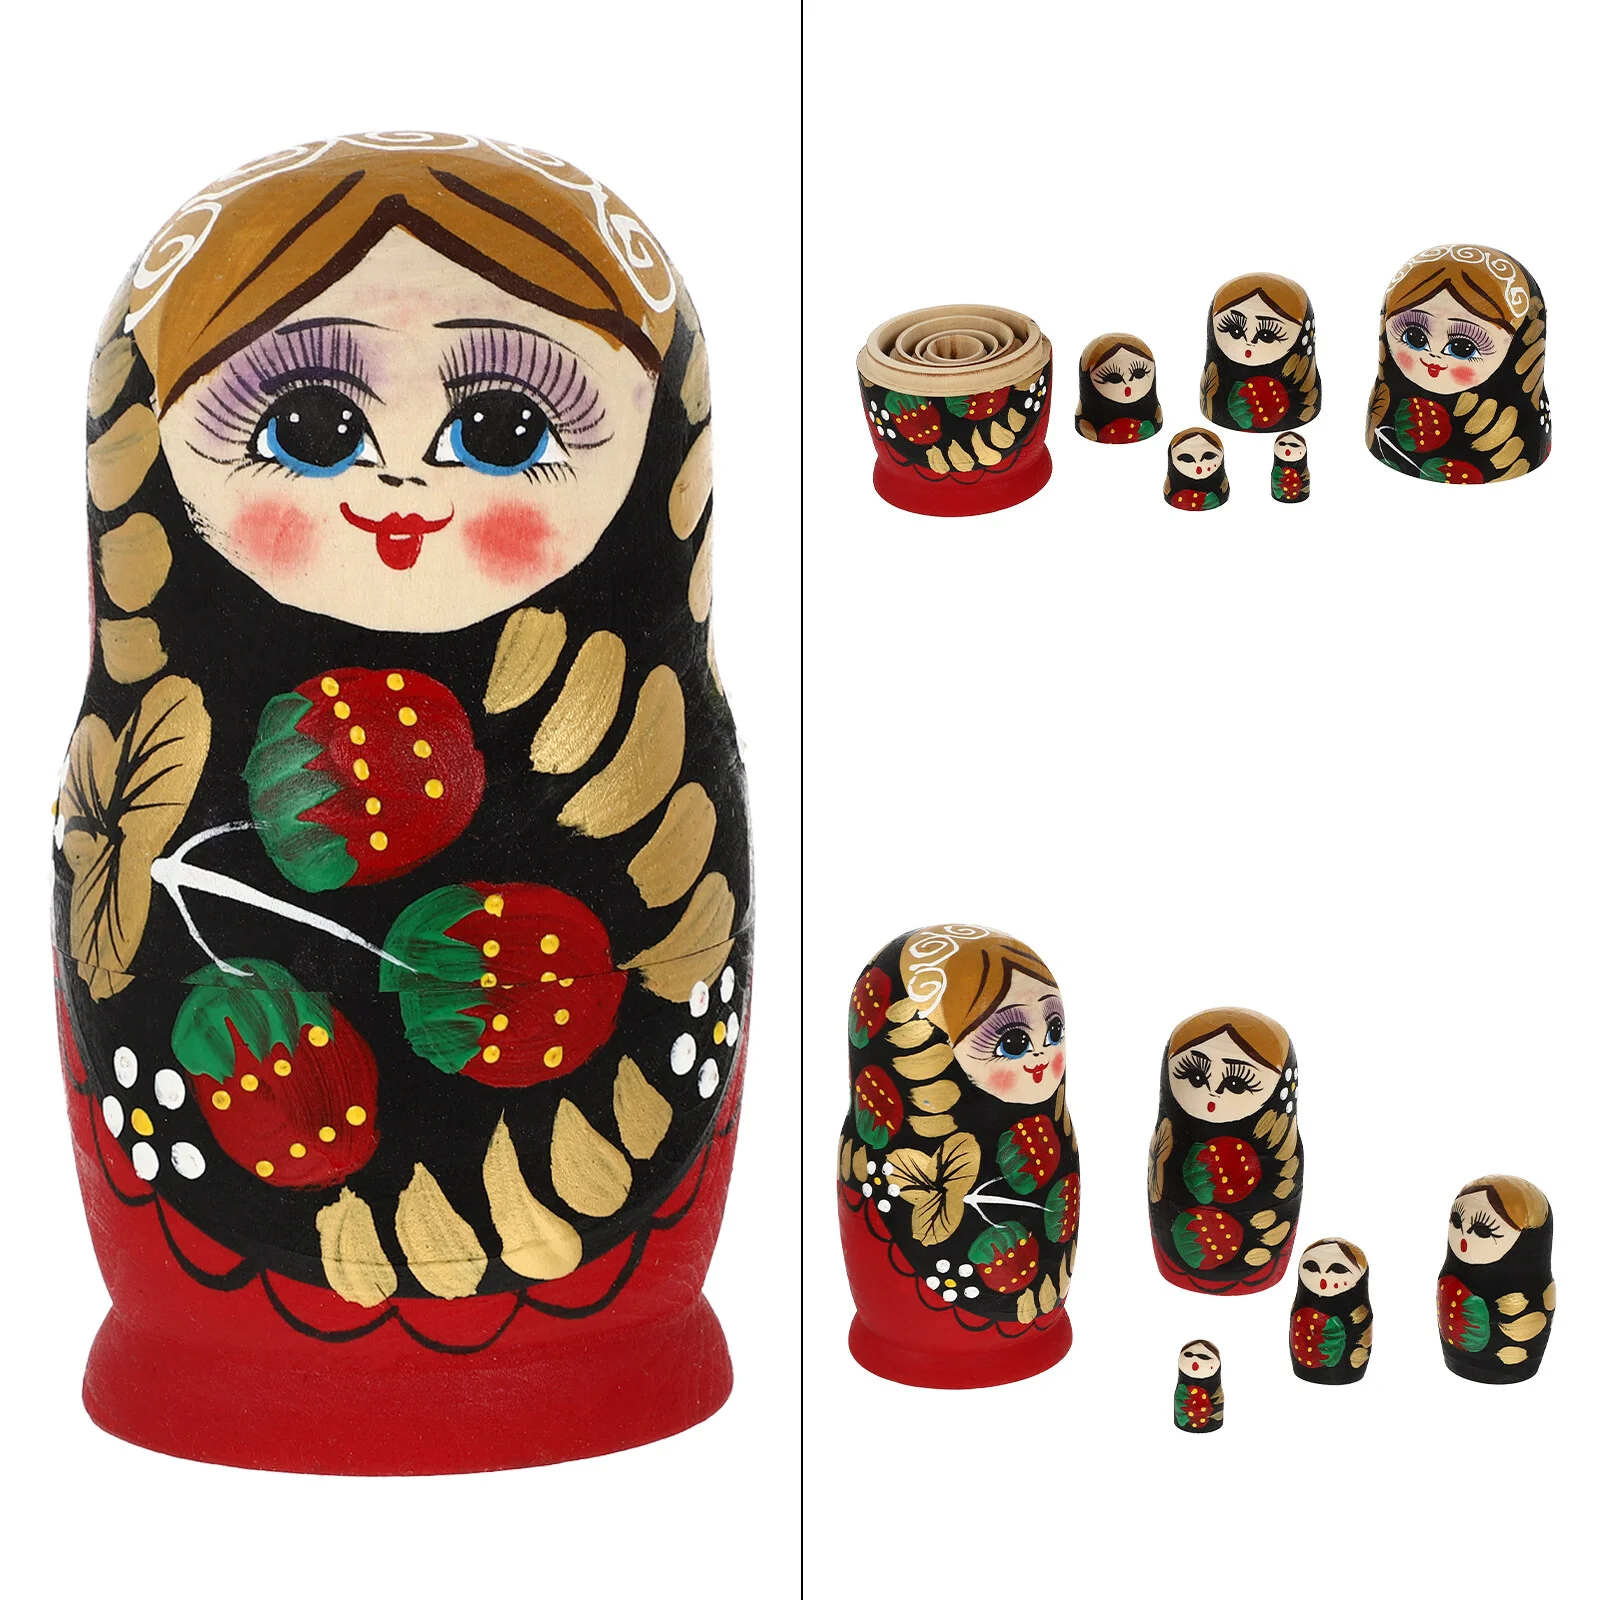 

5 Pcs Kids Wooden Toys Matryoshka Desktop Adornment Russian Nesting Decorate Painted Home Toddler